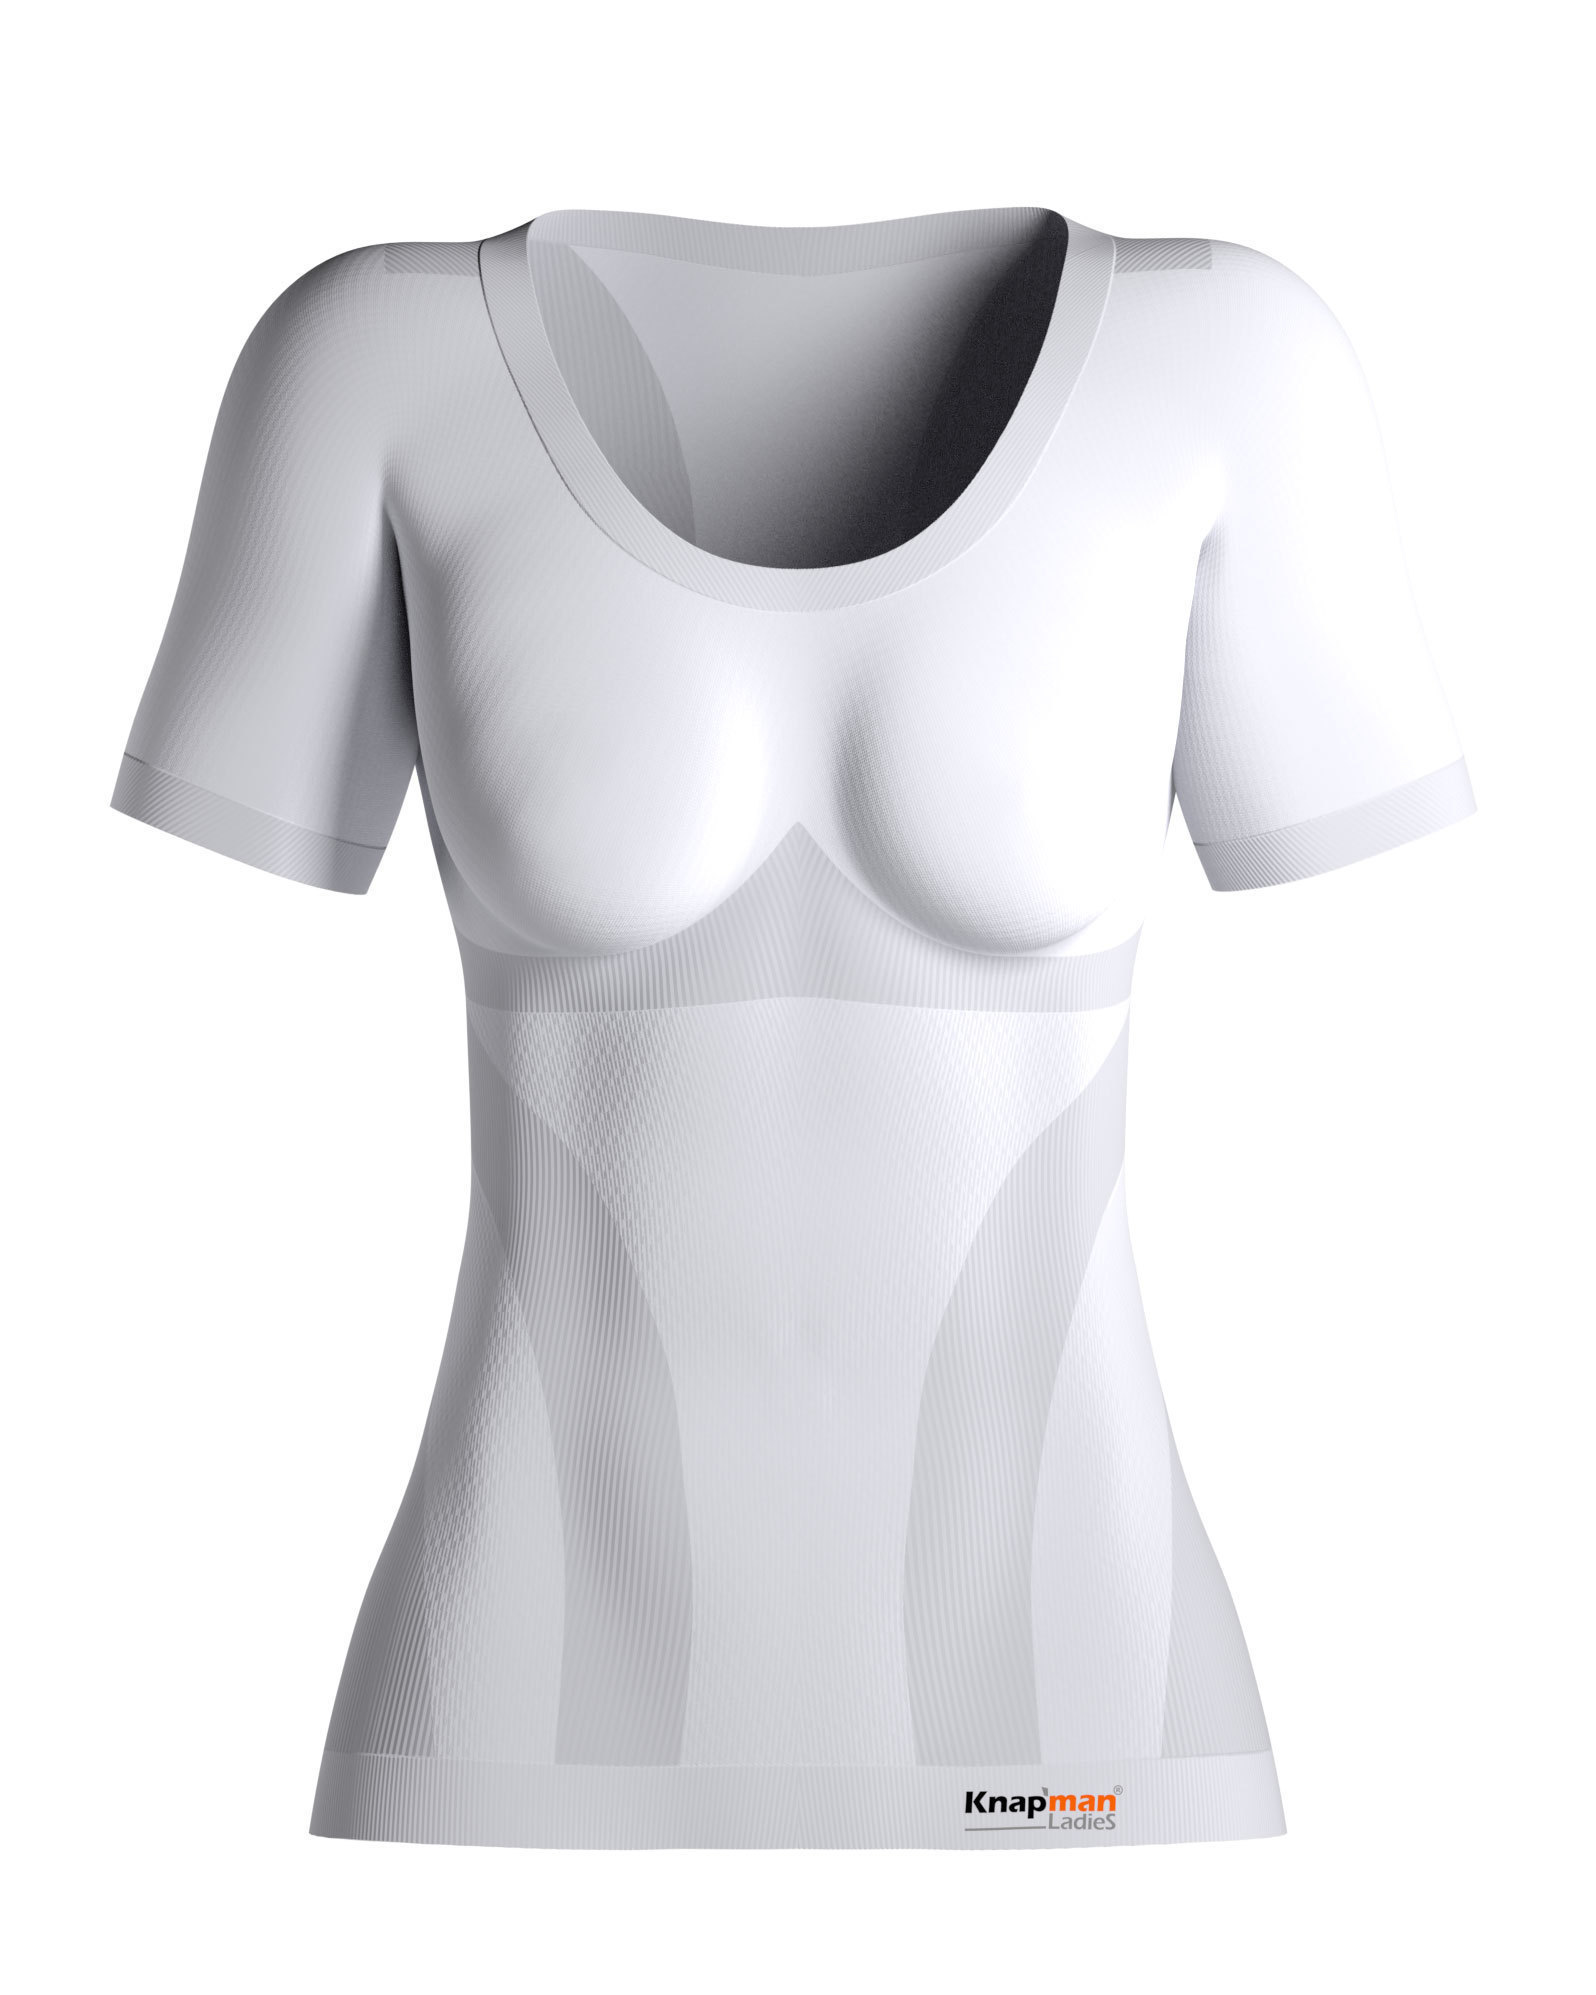 Knap'man Shop  Women's Zoned Compression Roundneck Shirt Invisible